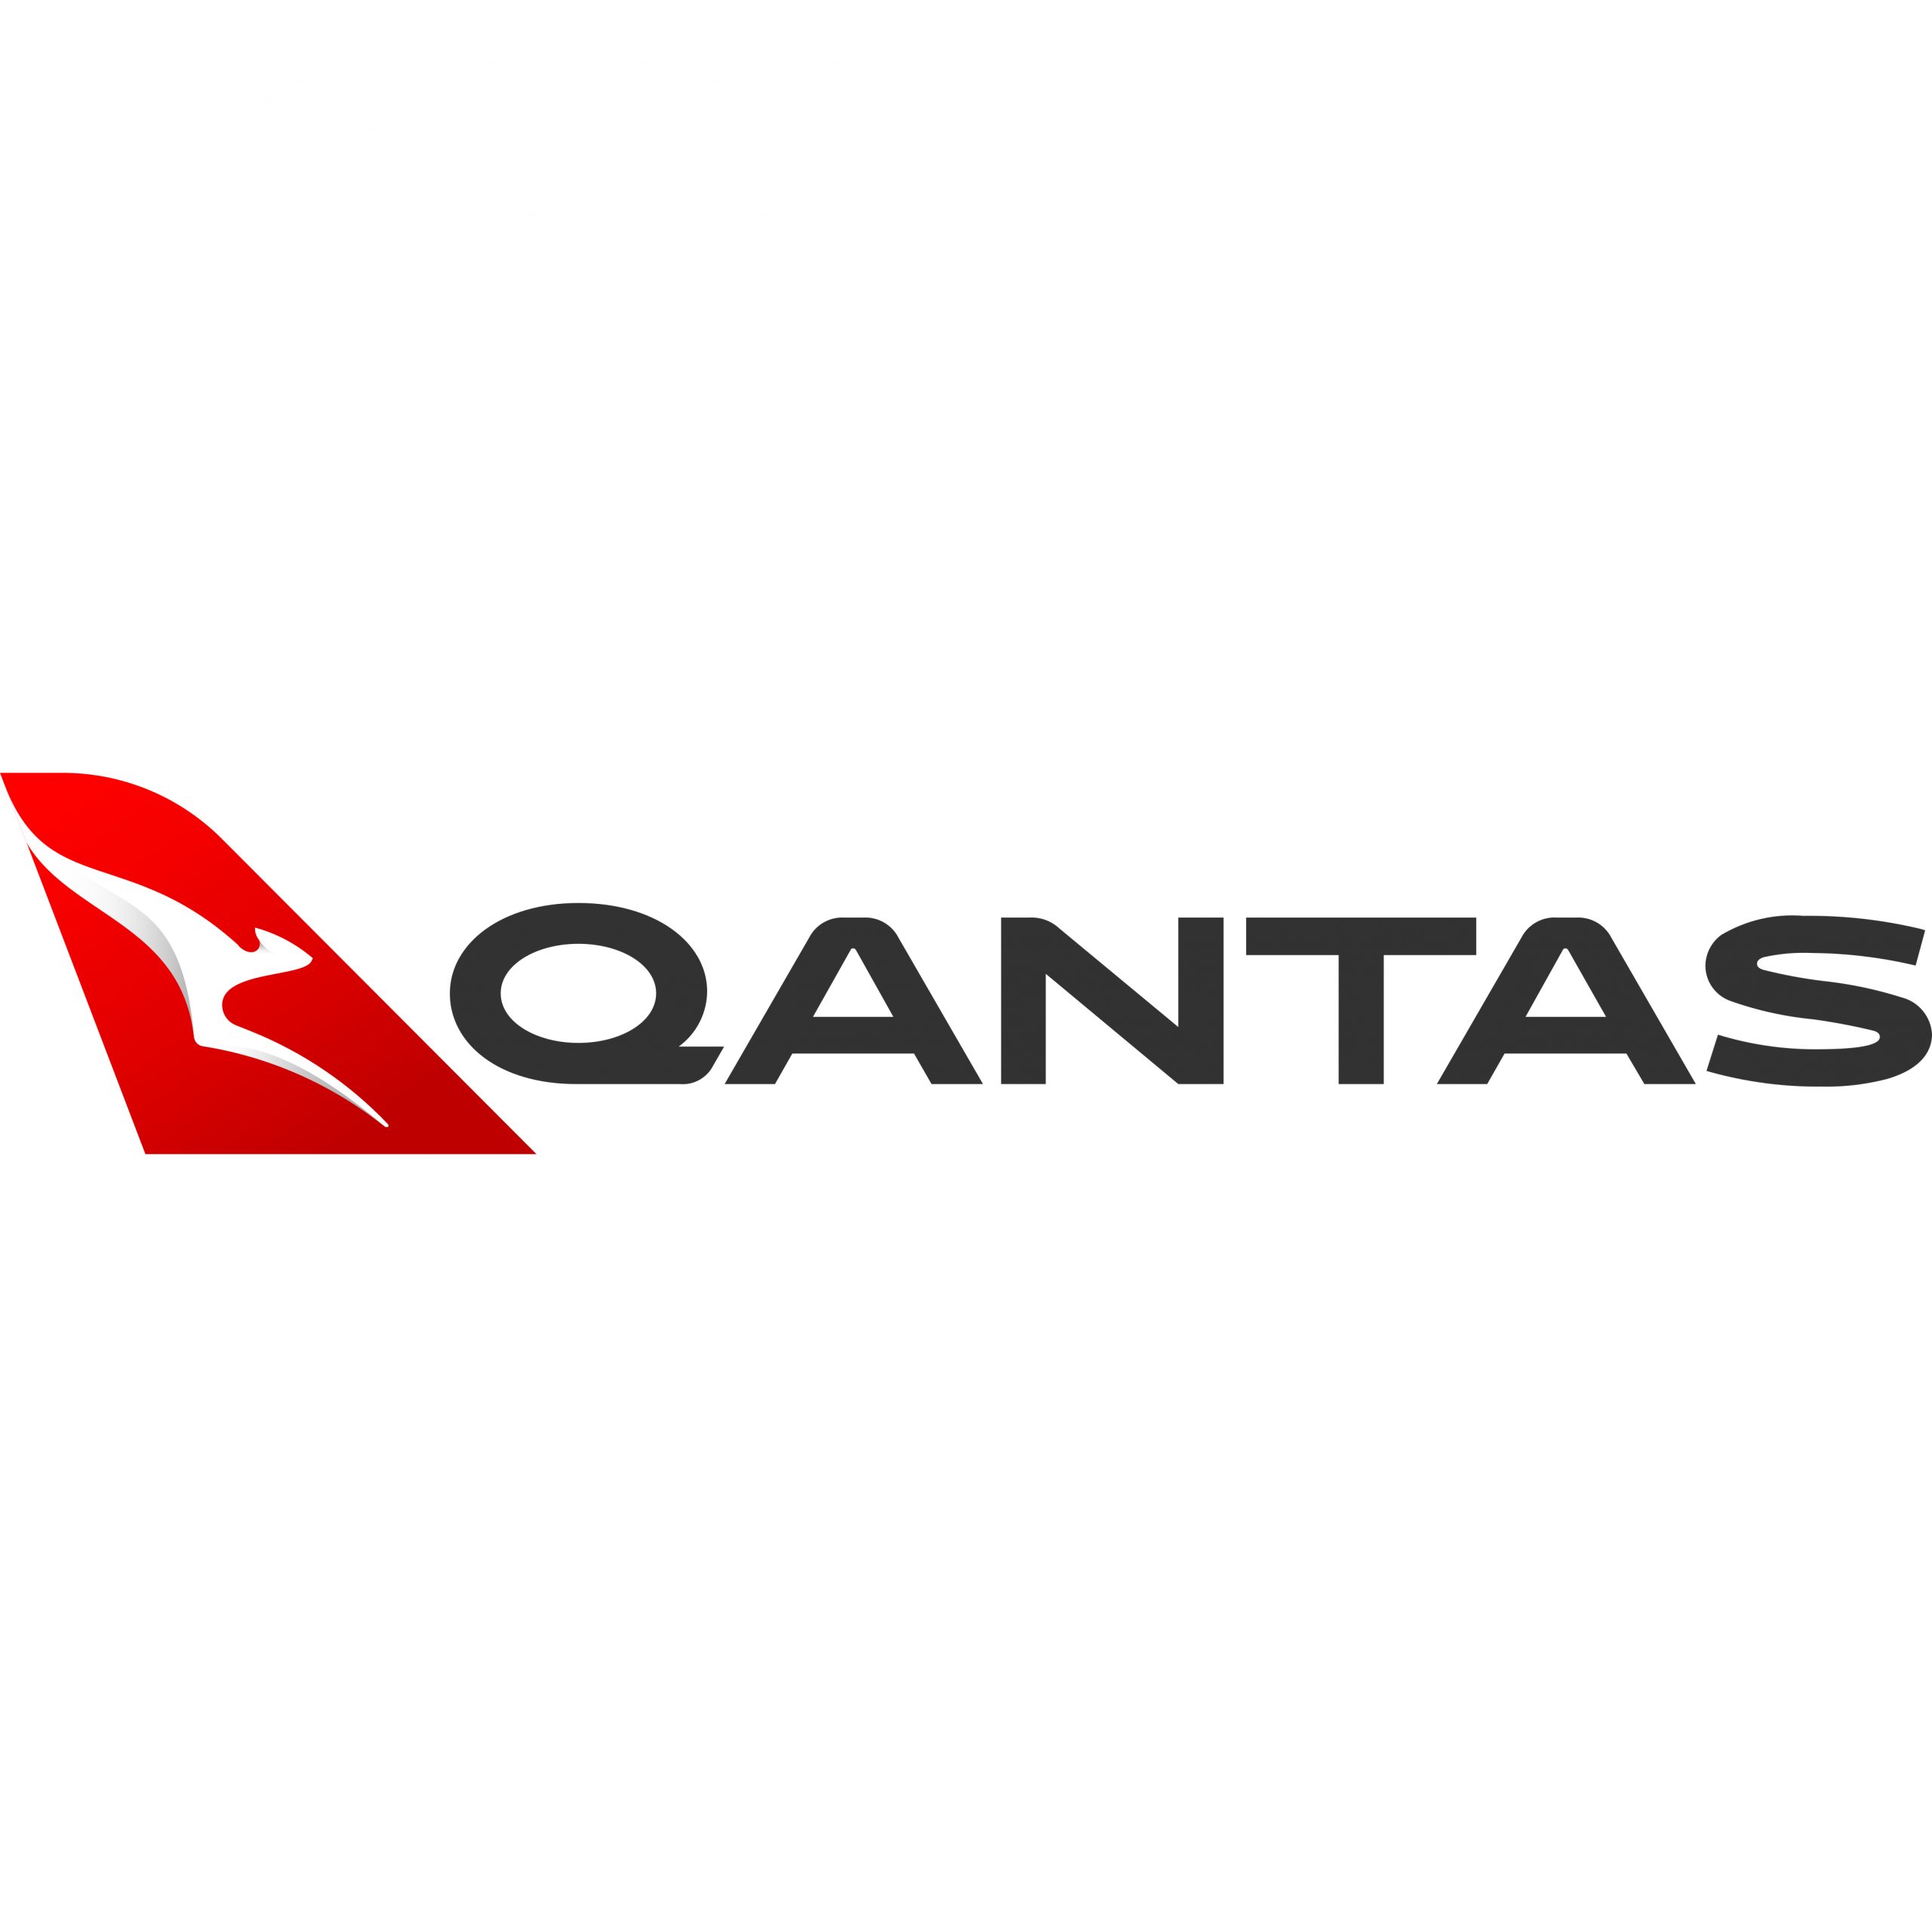 https://freightquip.com/production/wp-content/uploads/2020/07/Qantas-Logo-scaled.jpg